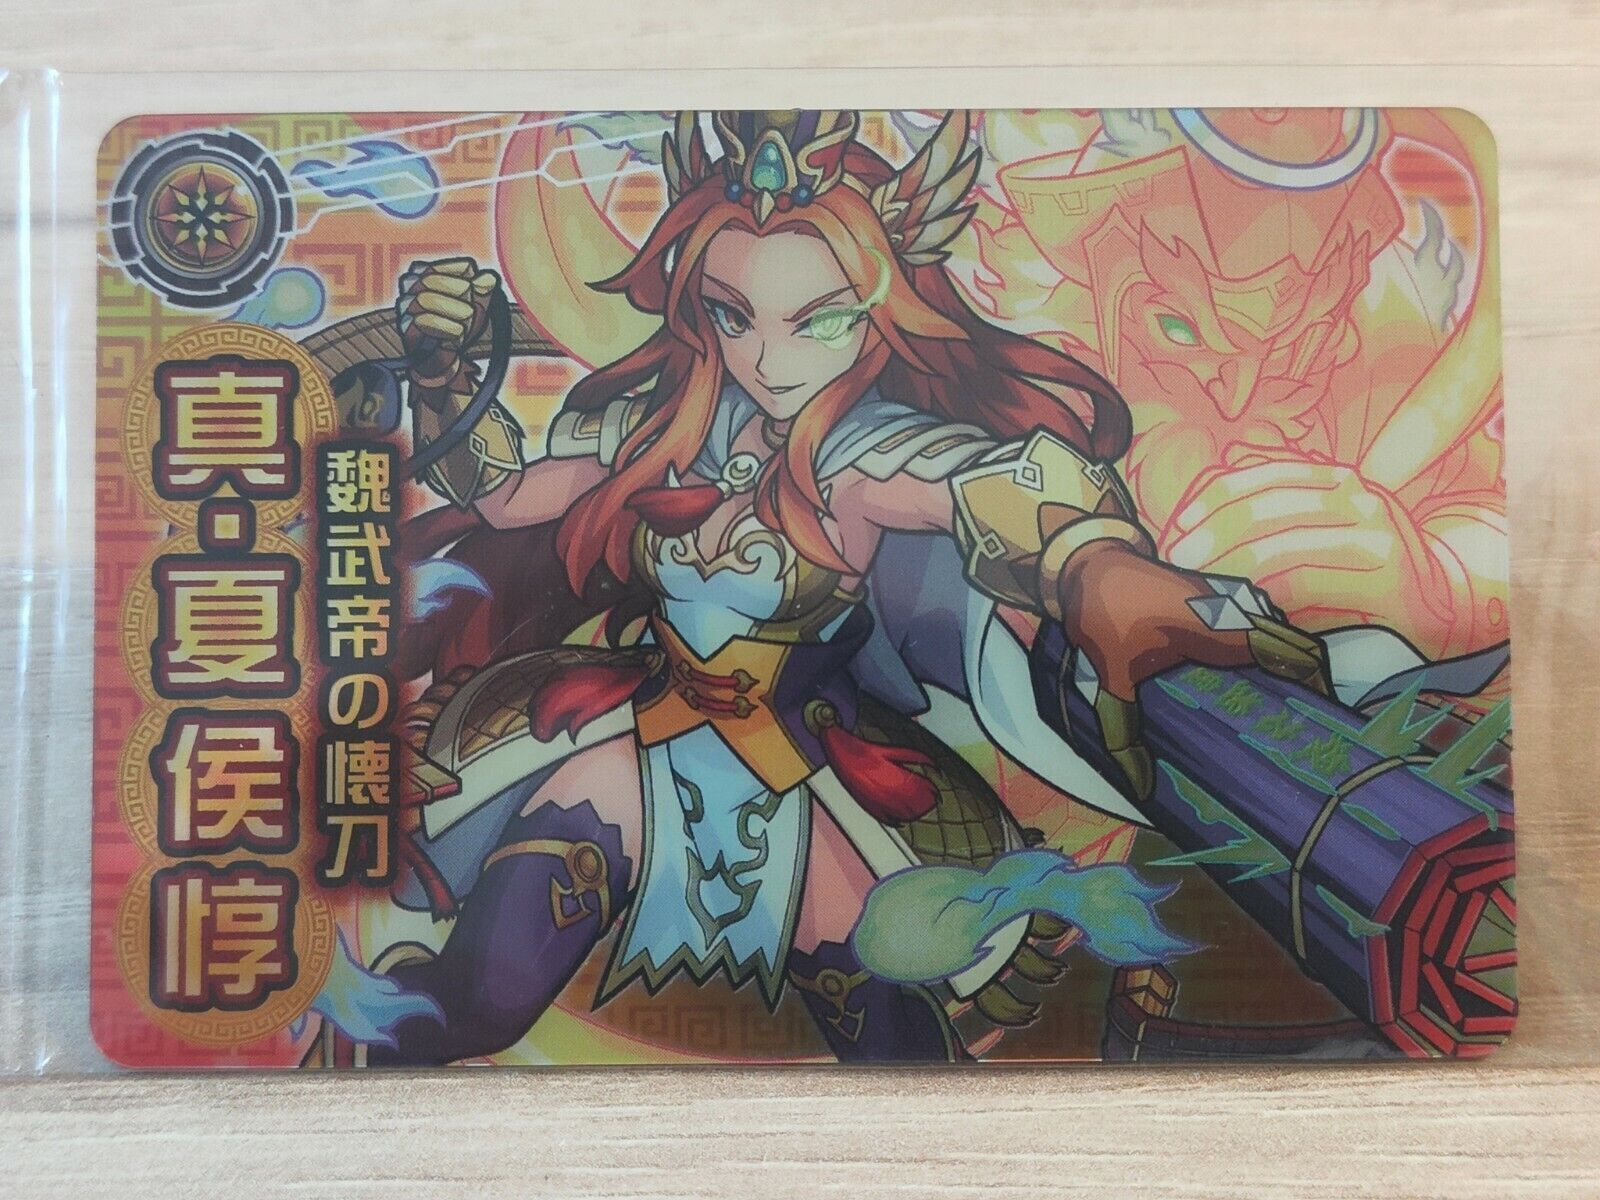 Anime Manga Q30 Wafer Card Bandai Made In Japan #5150